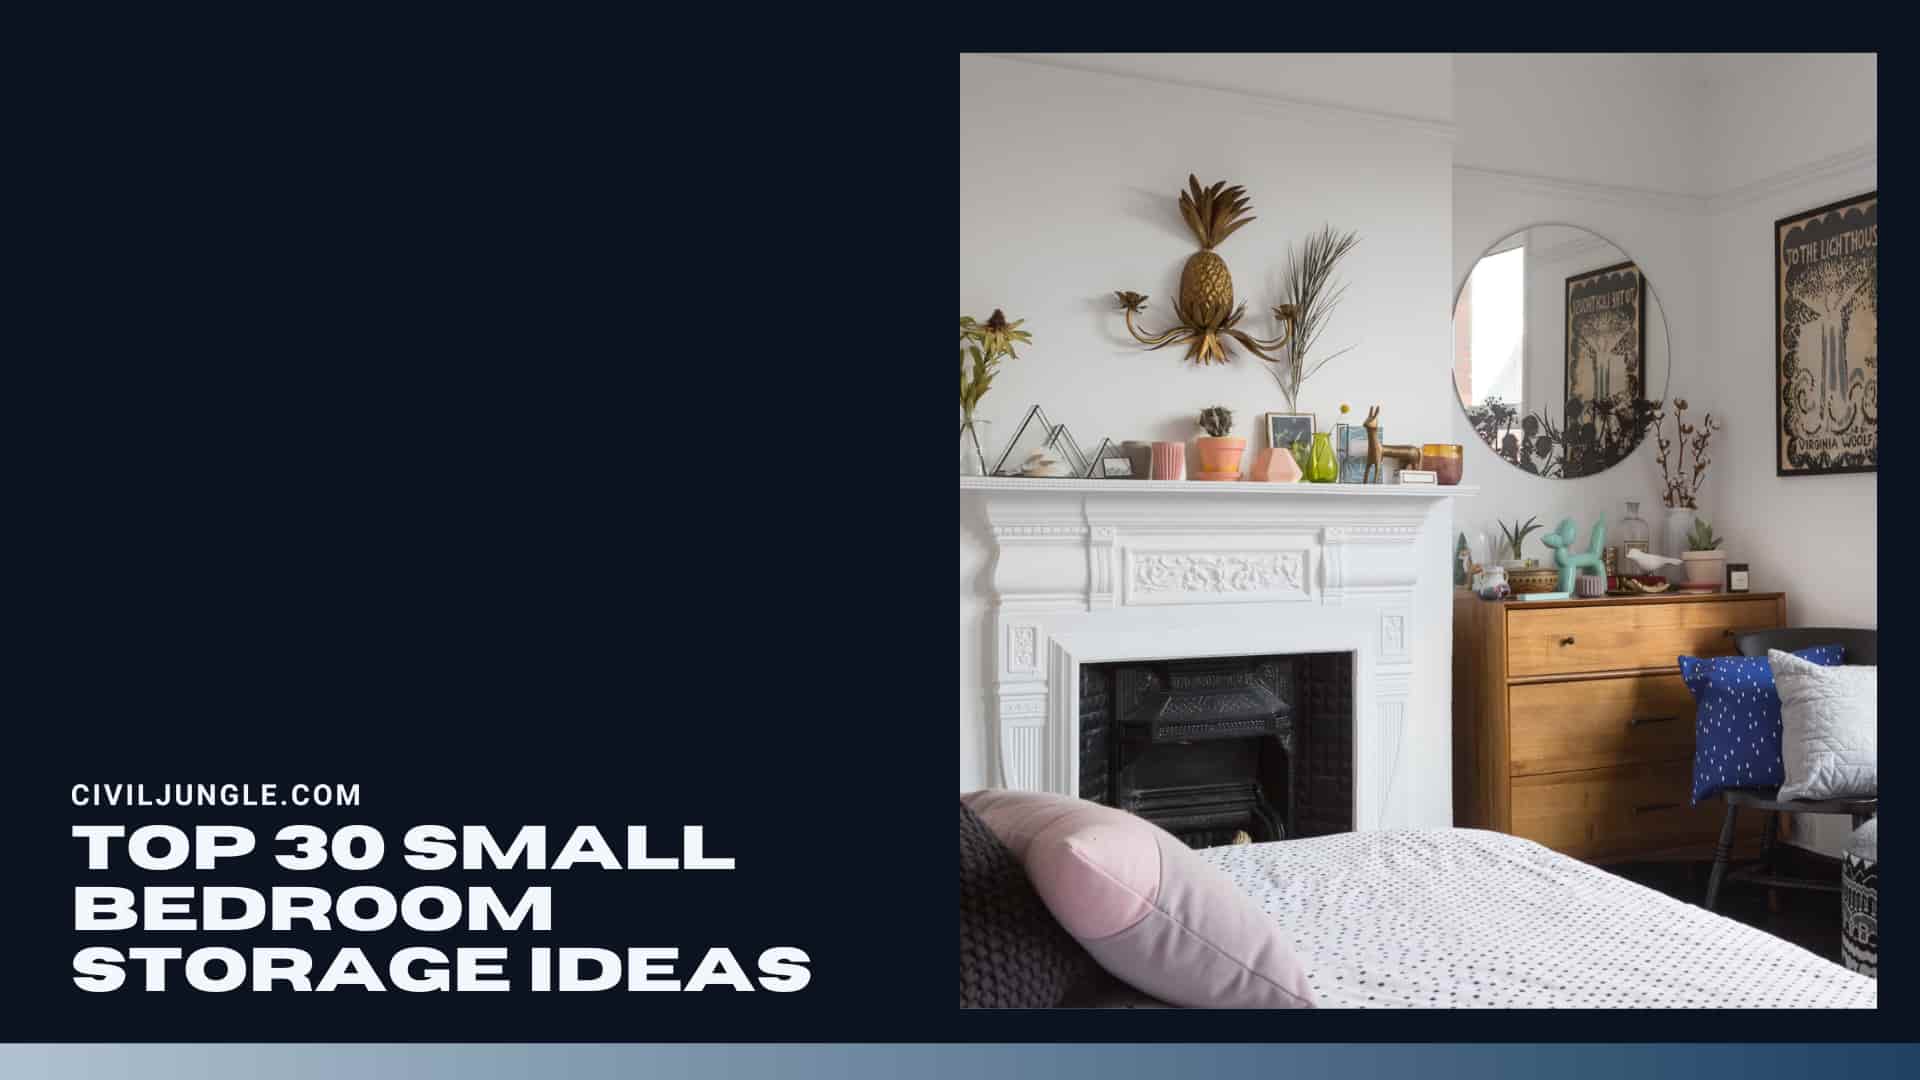 Top 30 Small Bedroom Storage Ideas